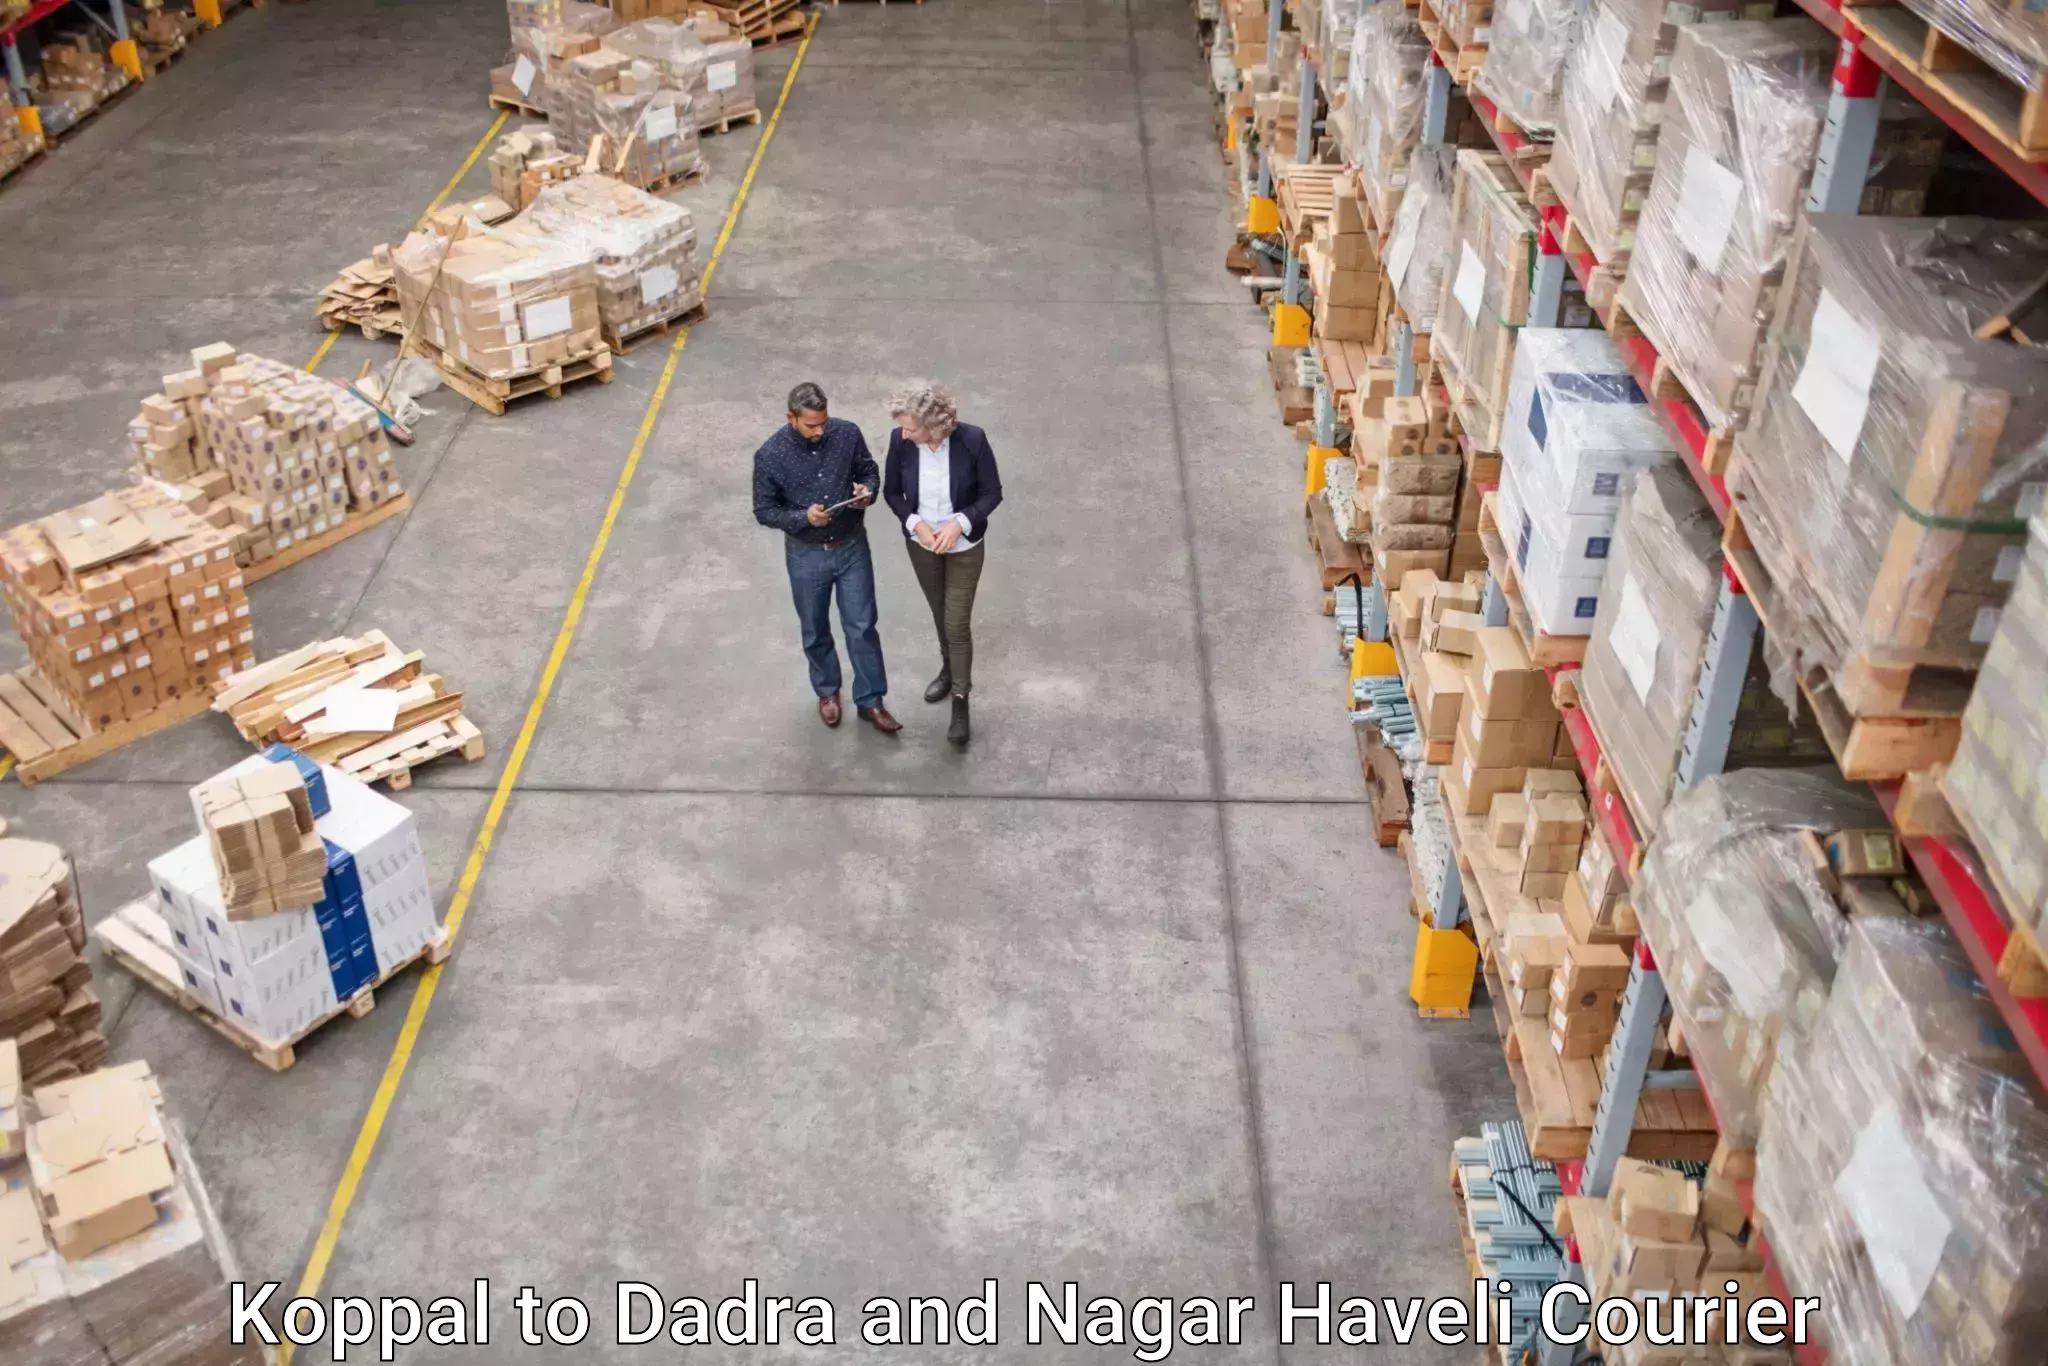 Express delivery capabilities Koppal to Silvassa